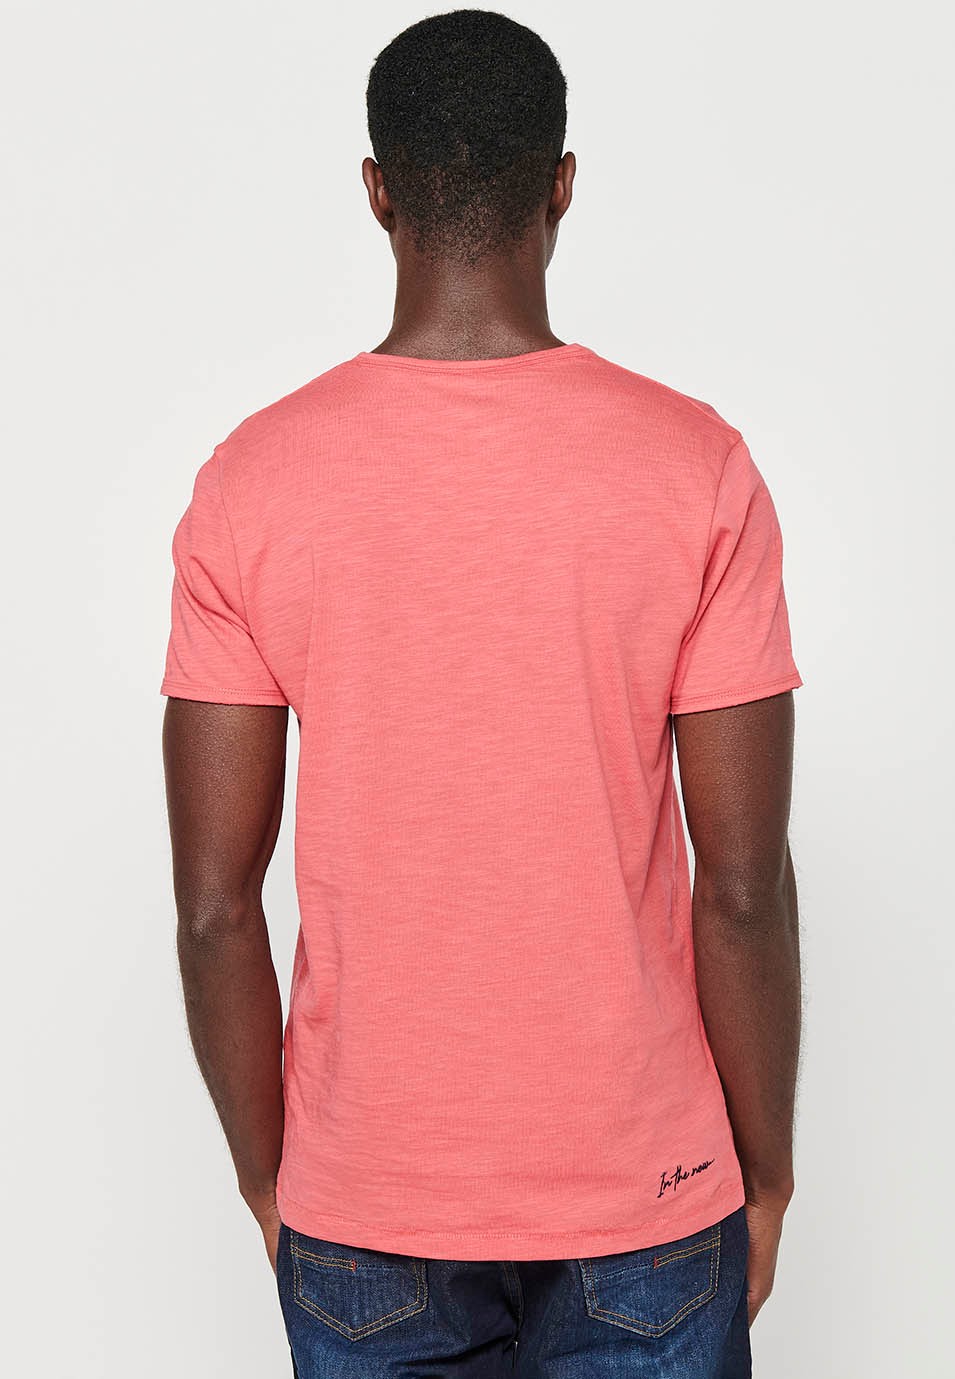 Basic short-sleeved cotton T-shirt, V-neck with button, pink color for men 3